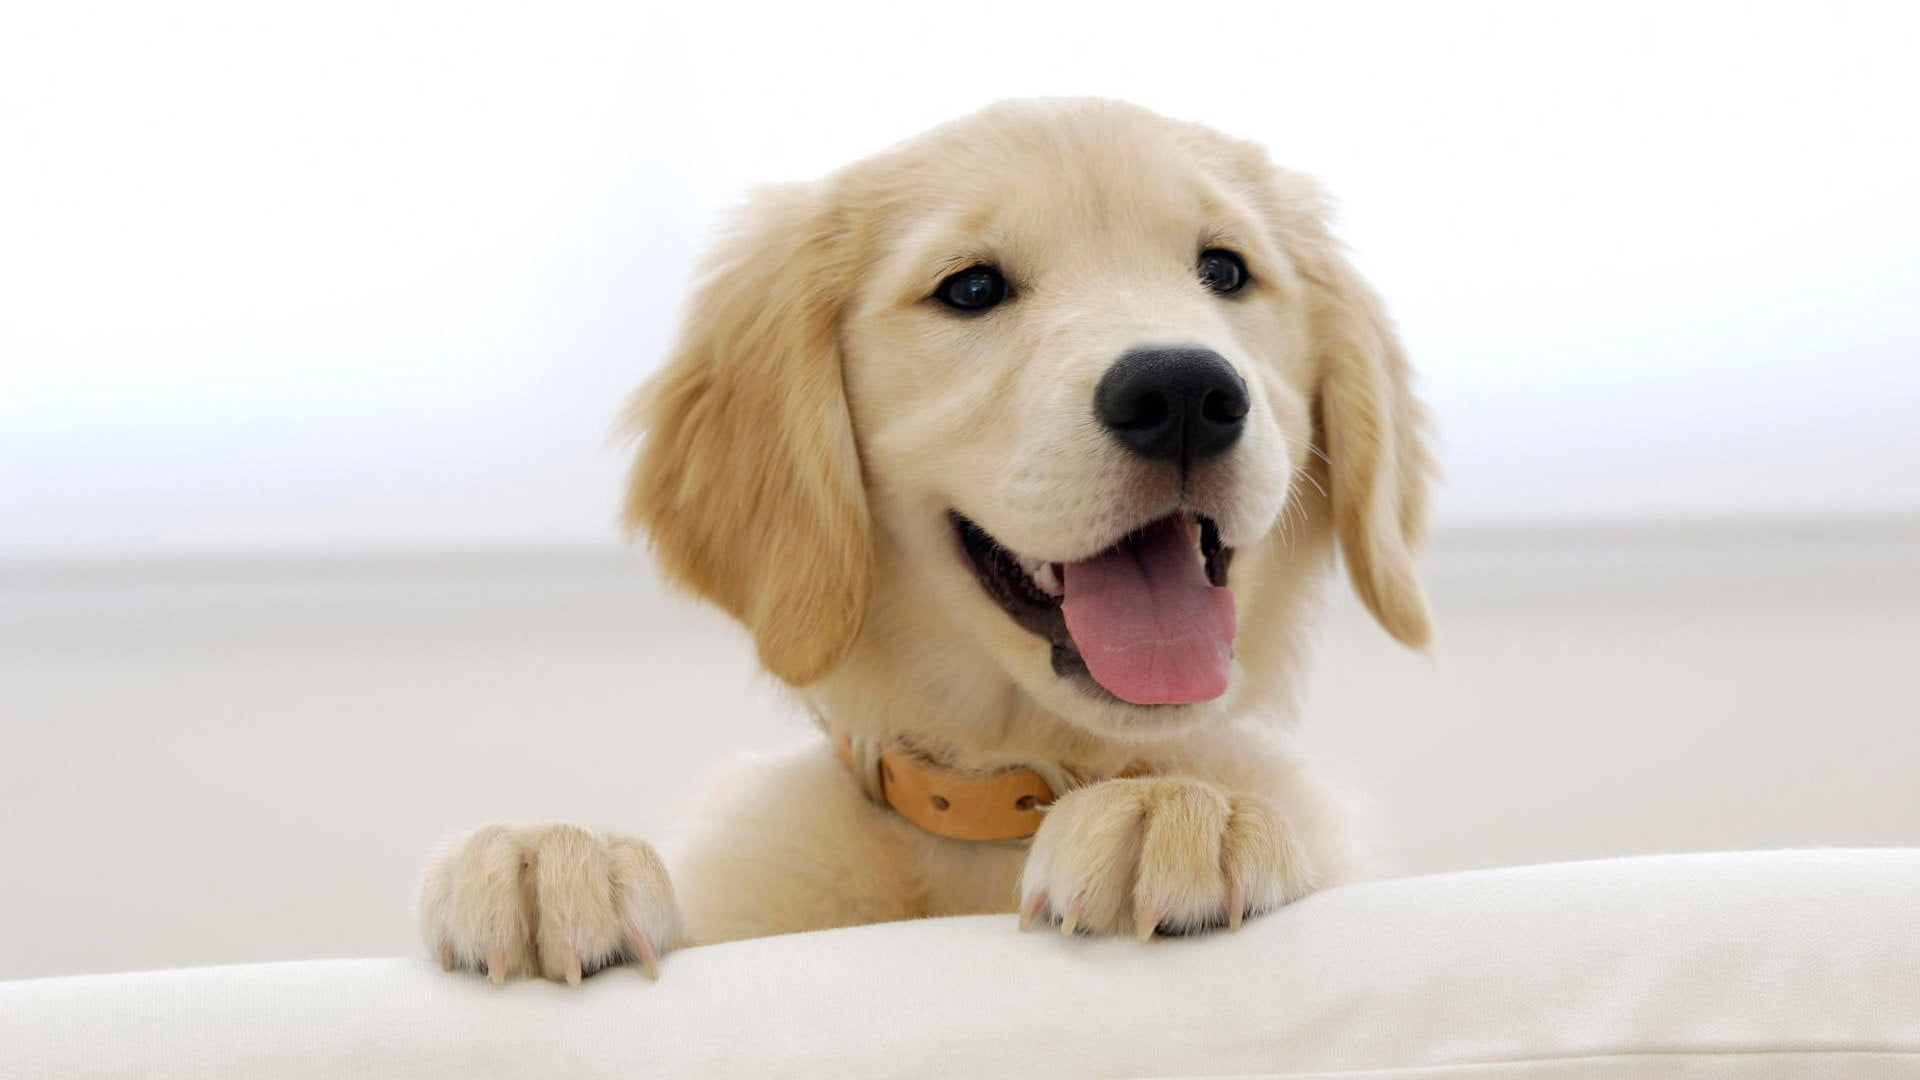 Beige dog, puppies, golden retrievers, animals, canine, pets wallpaper